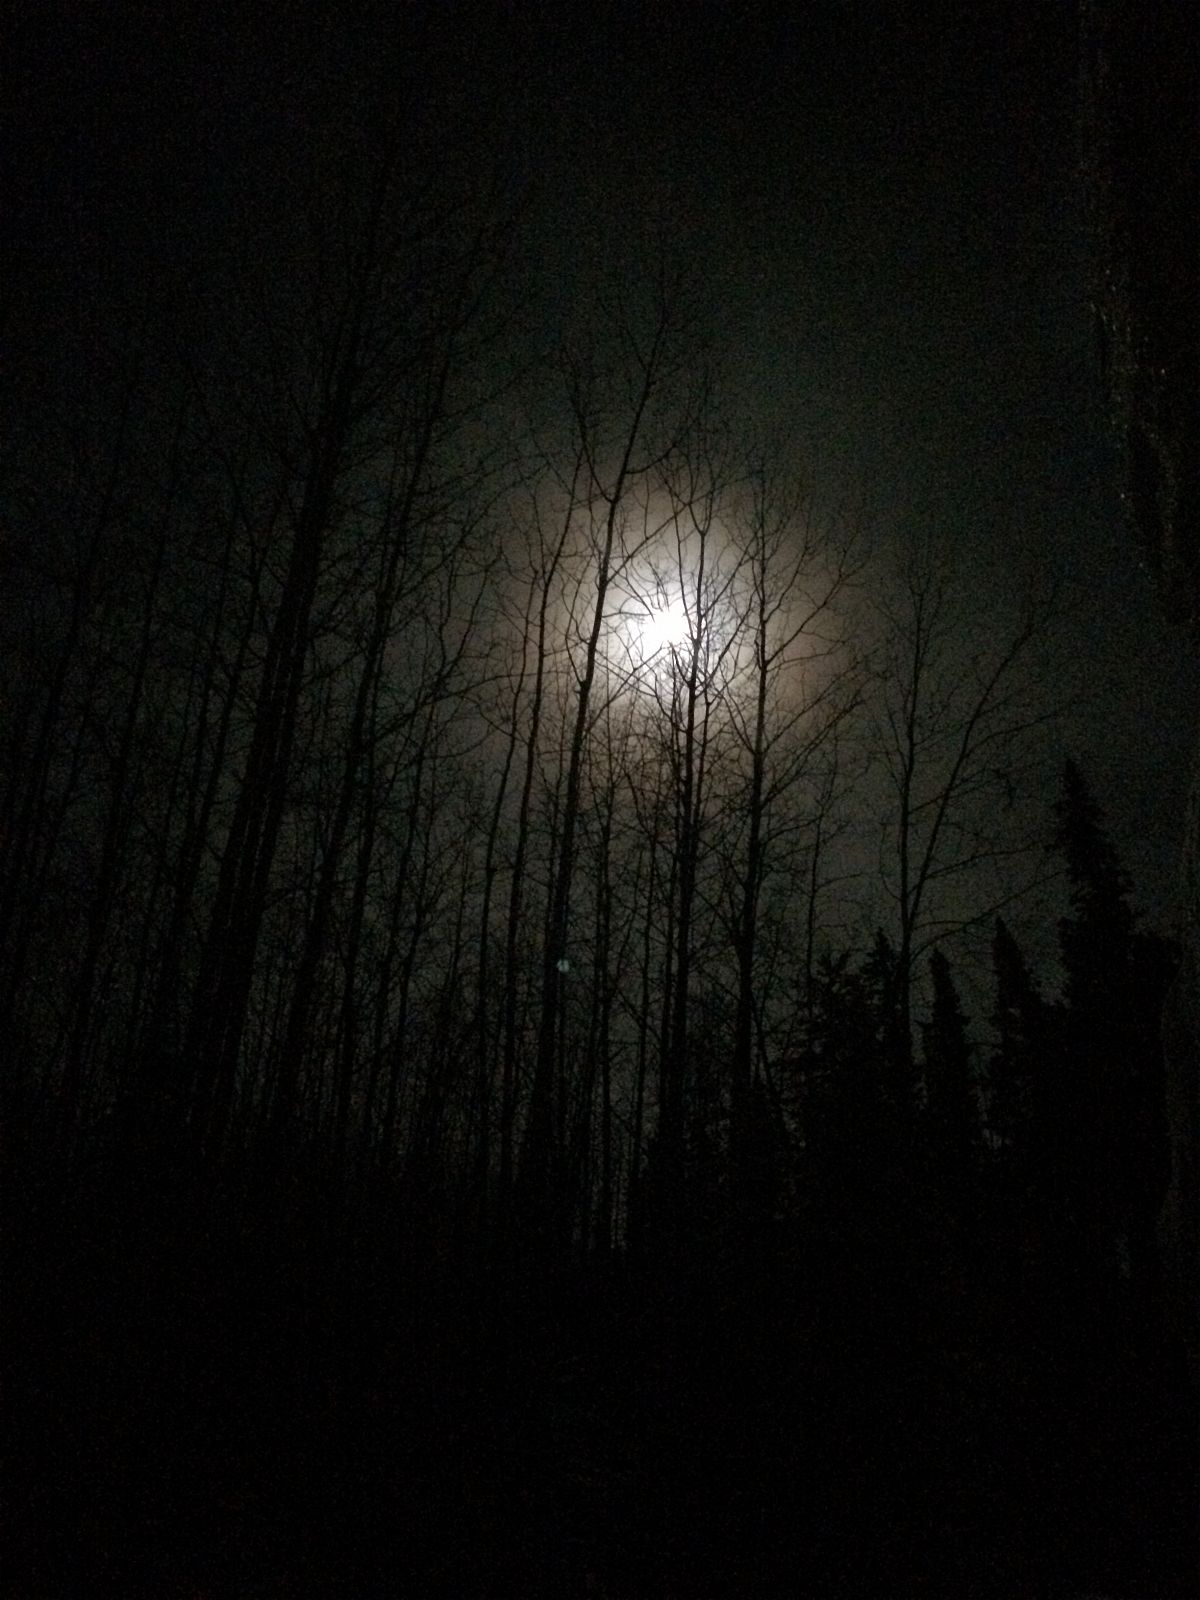 evening ride under a full moon